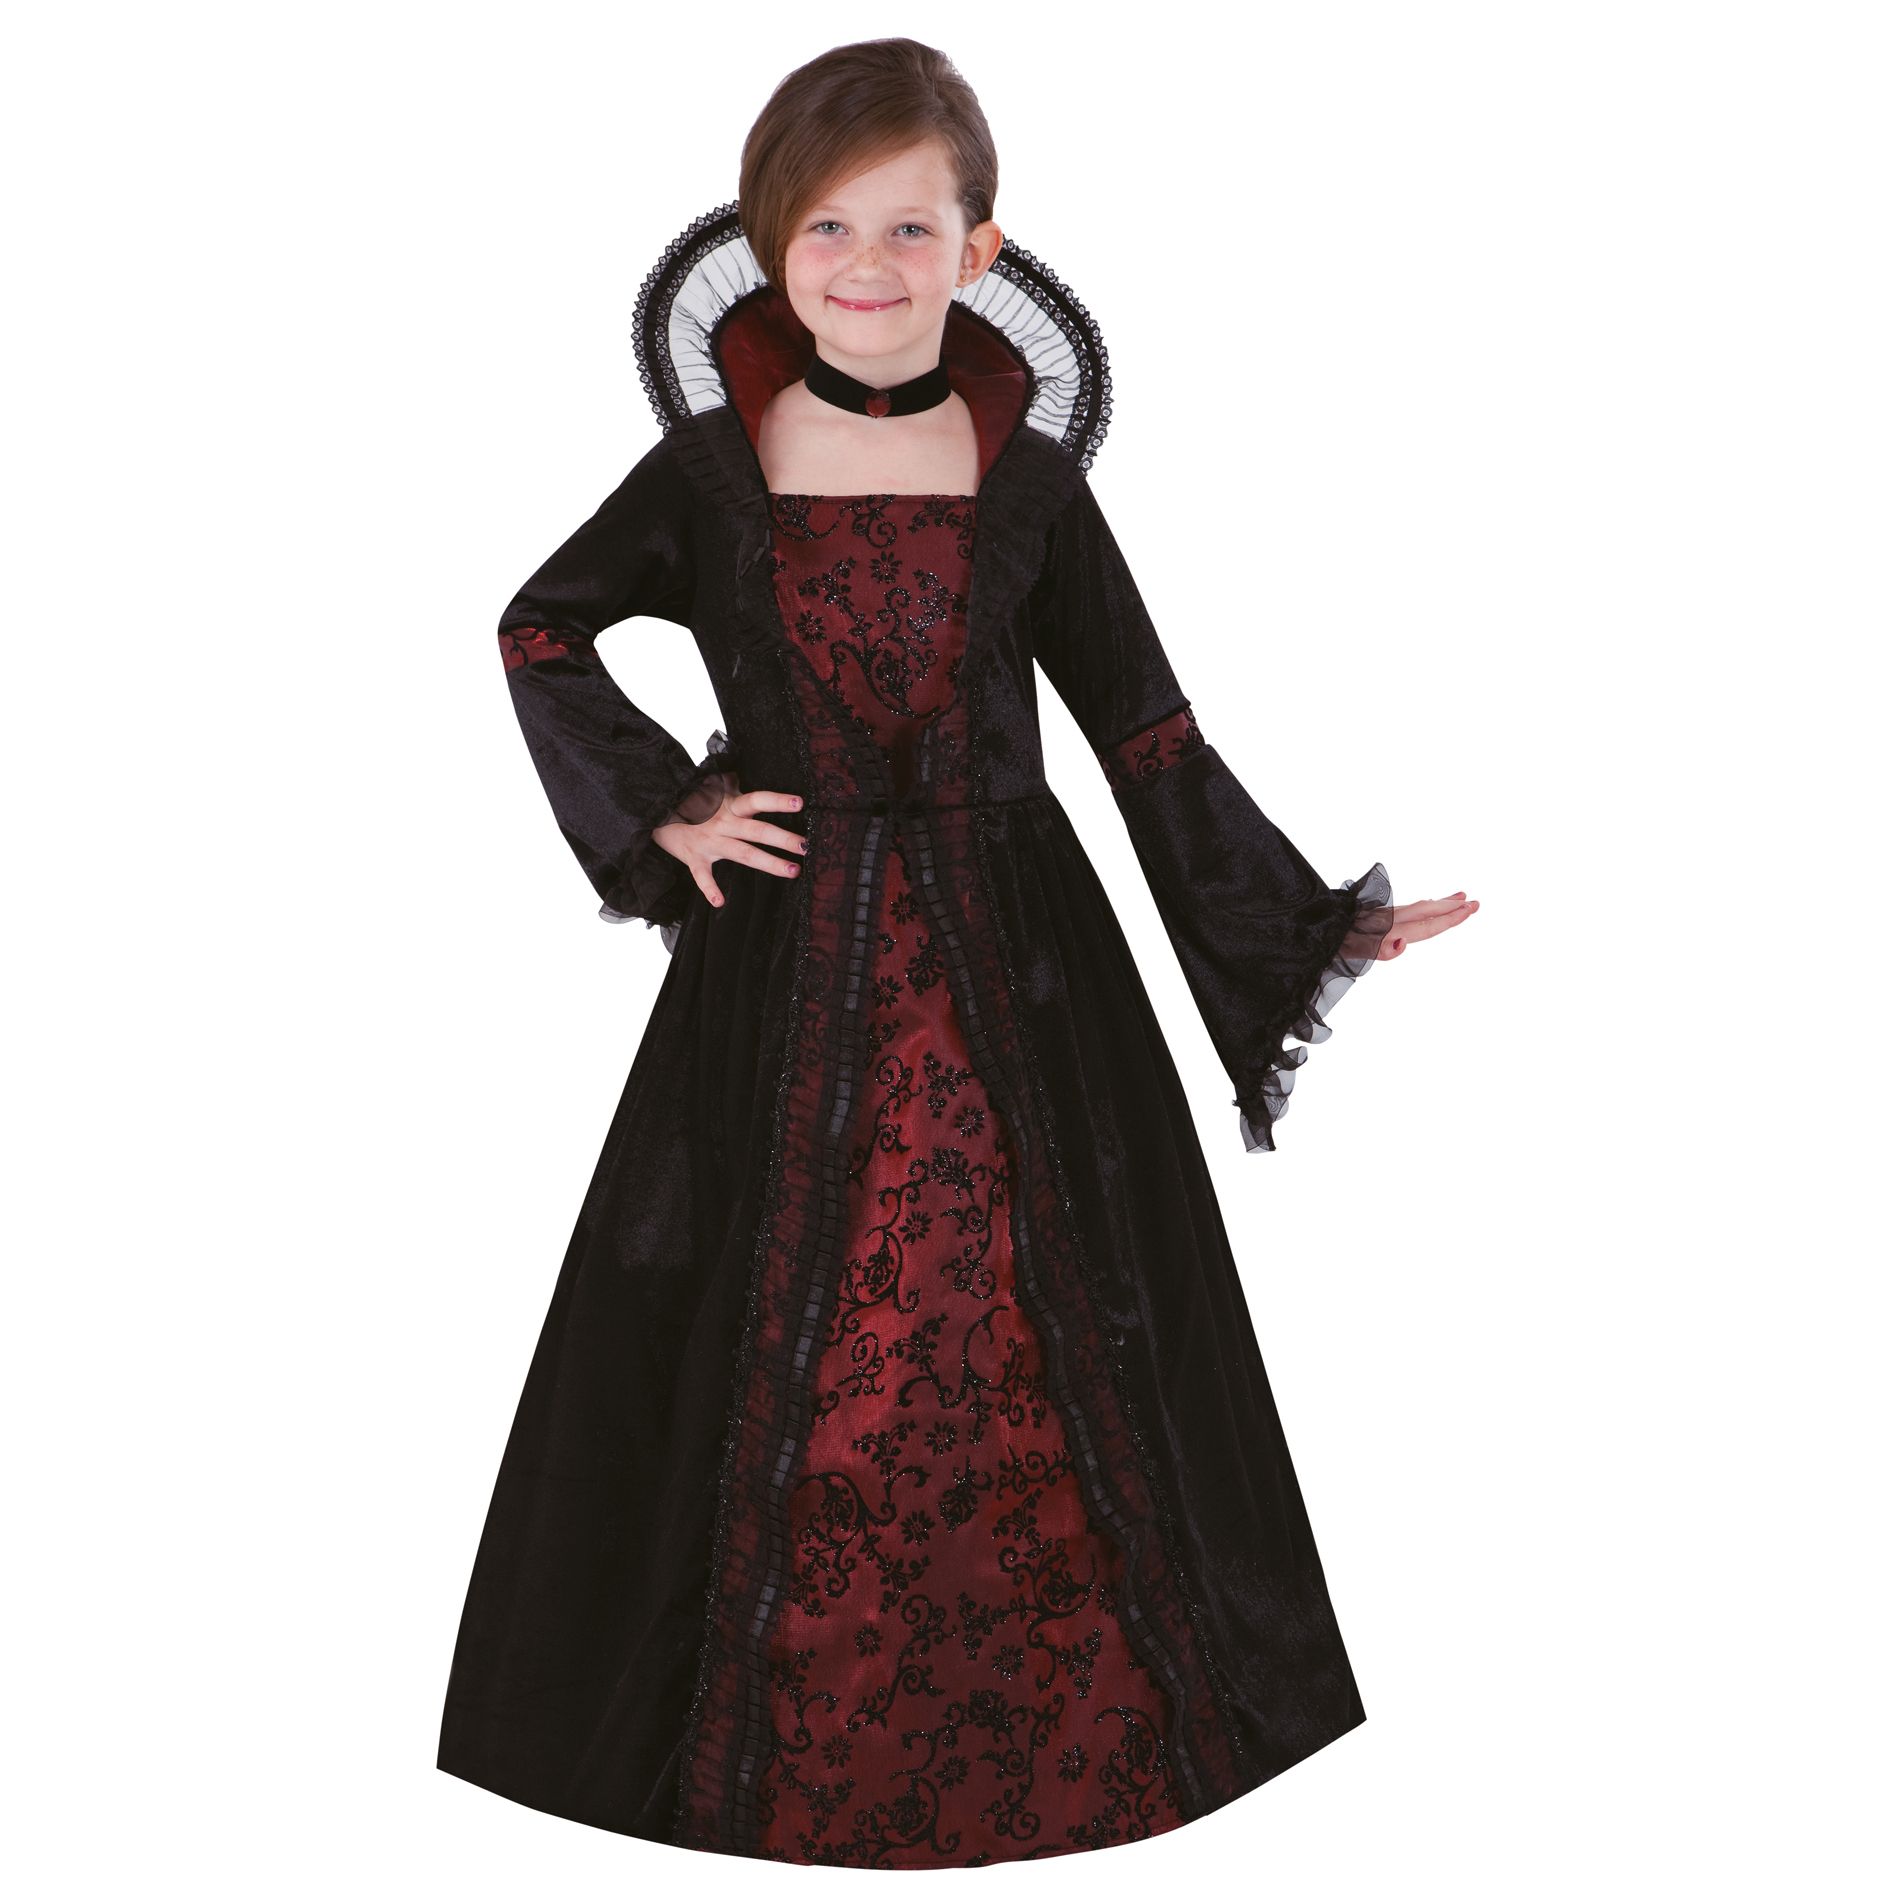 Totally Ghoul Deluxe Vampiress Girl's Halloween Costume